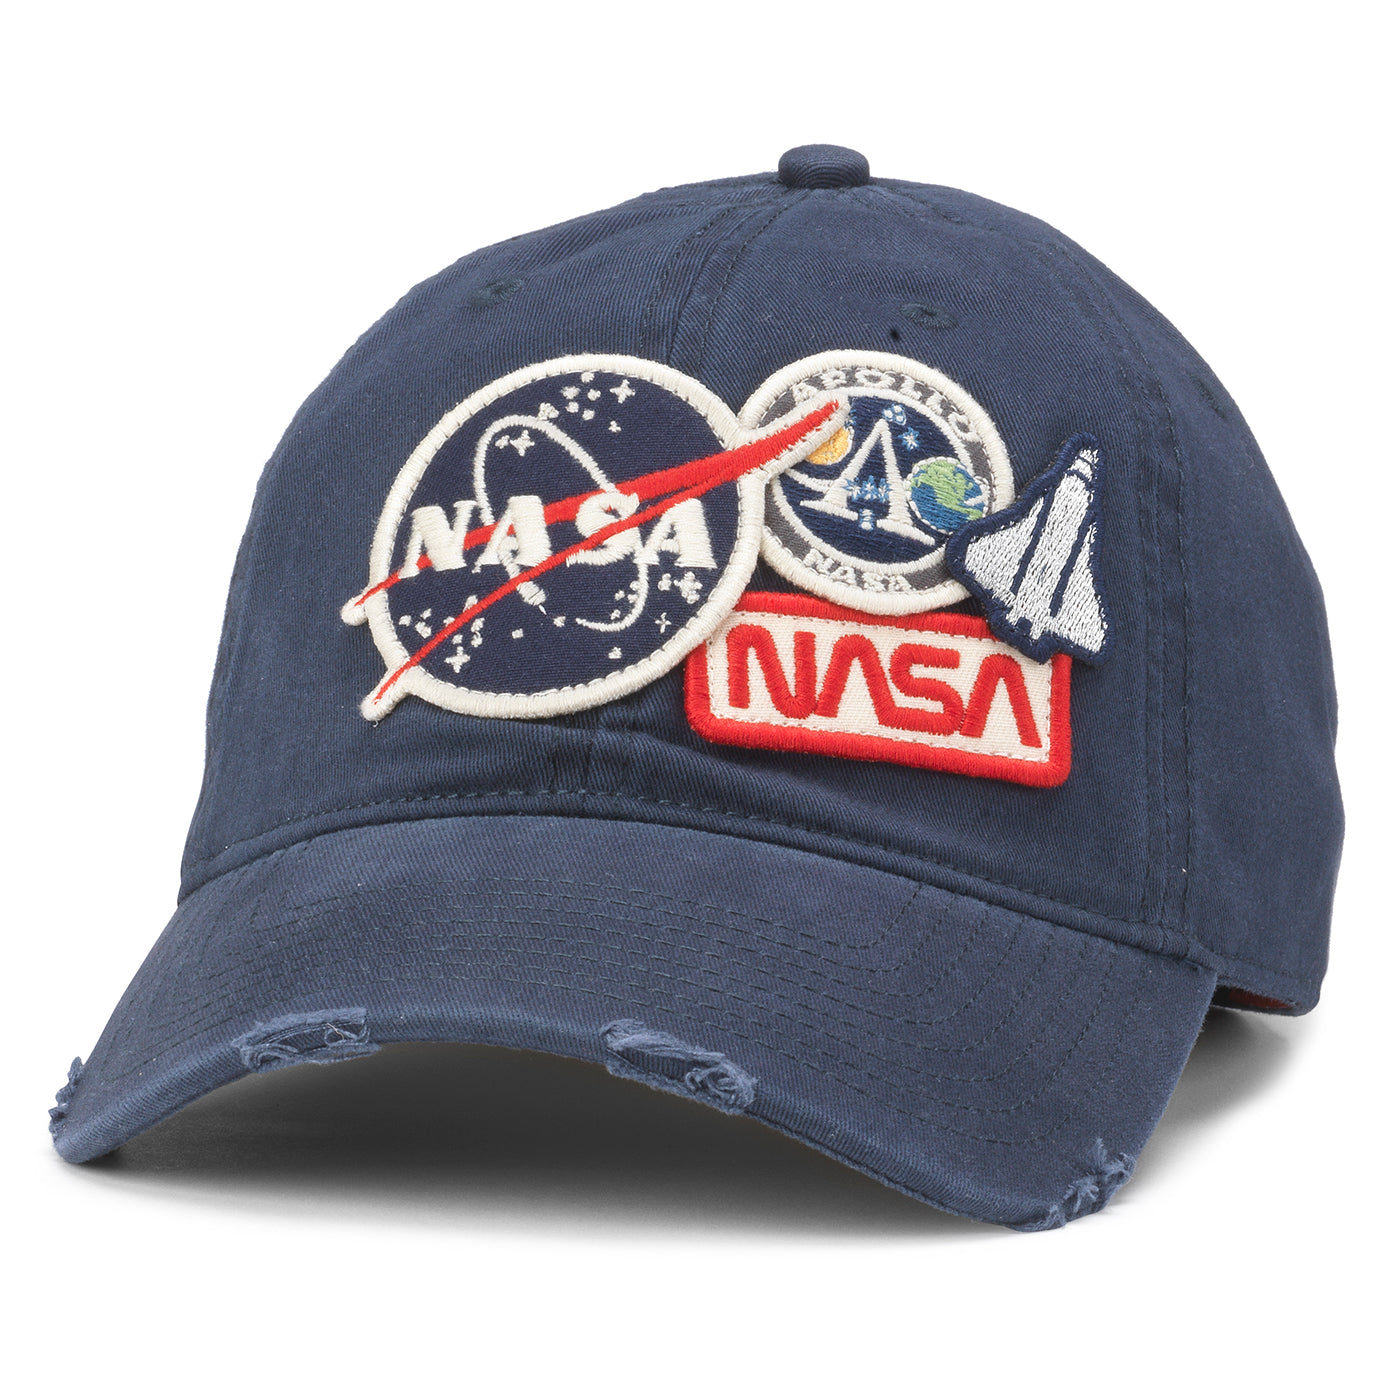 Iconic NASA Snapback Hat